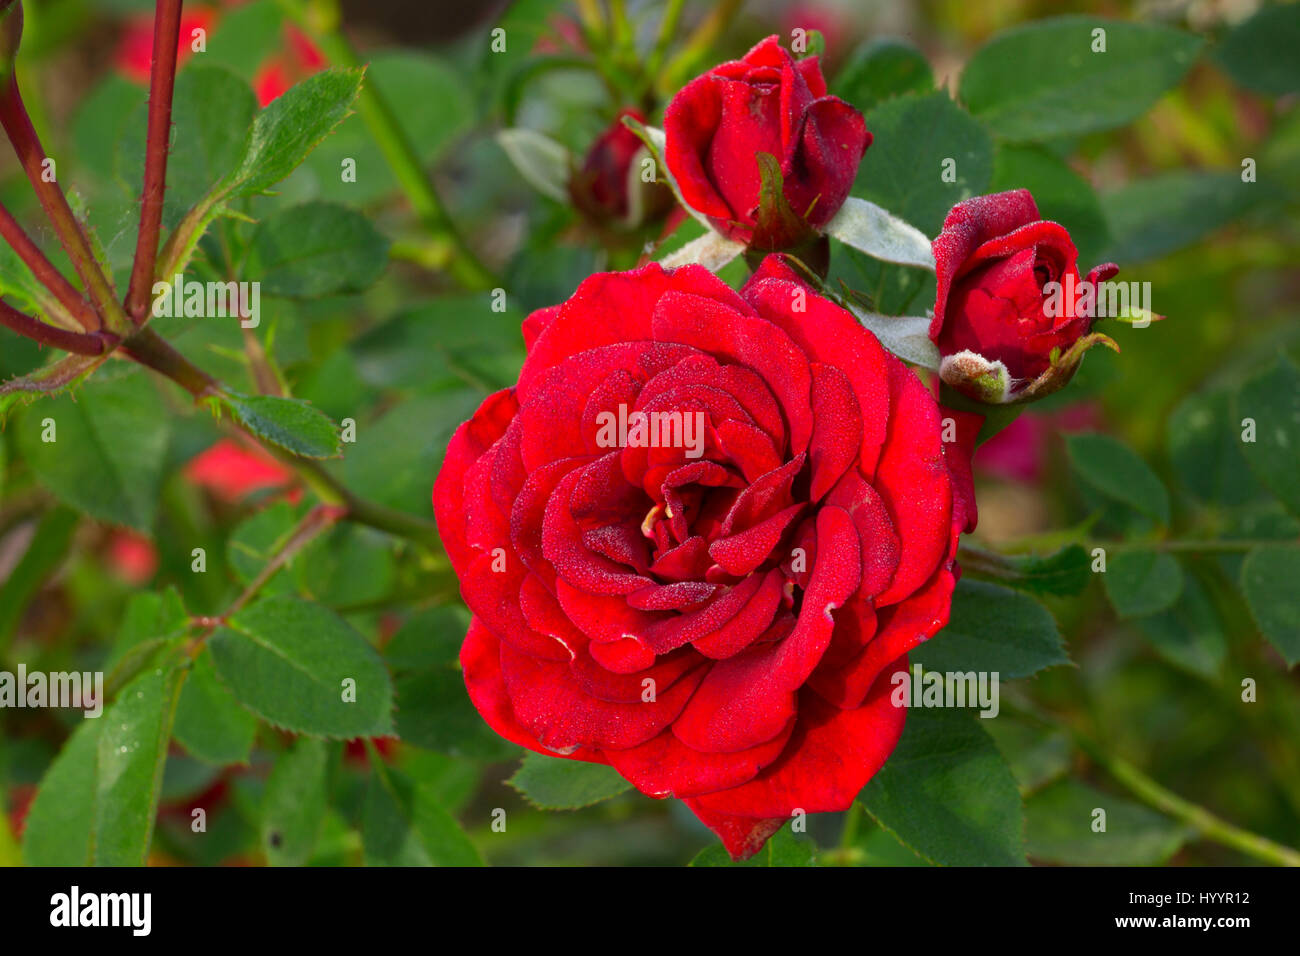 https://c8.alamy.com/comp/HYYR12/new-orleans-rose-heirloom-roses-st-paul-oregon-HYYR12.jpg